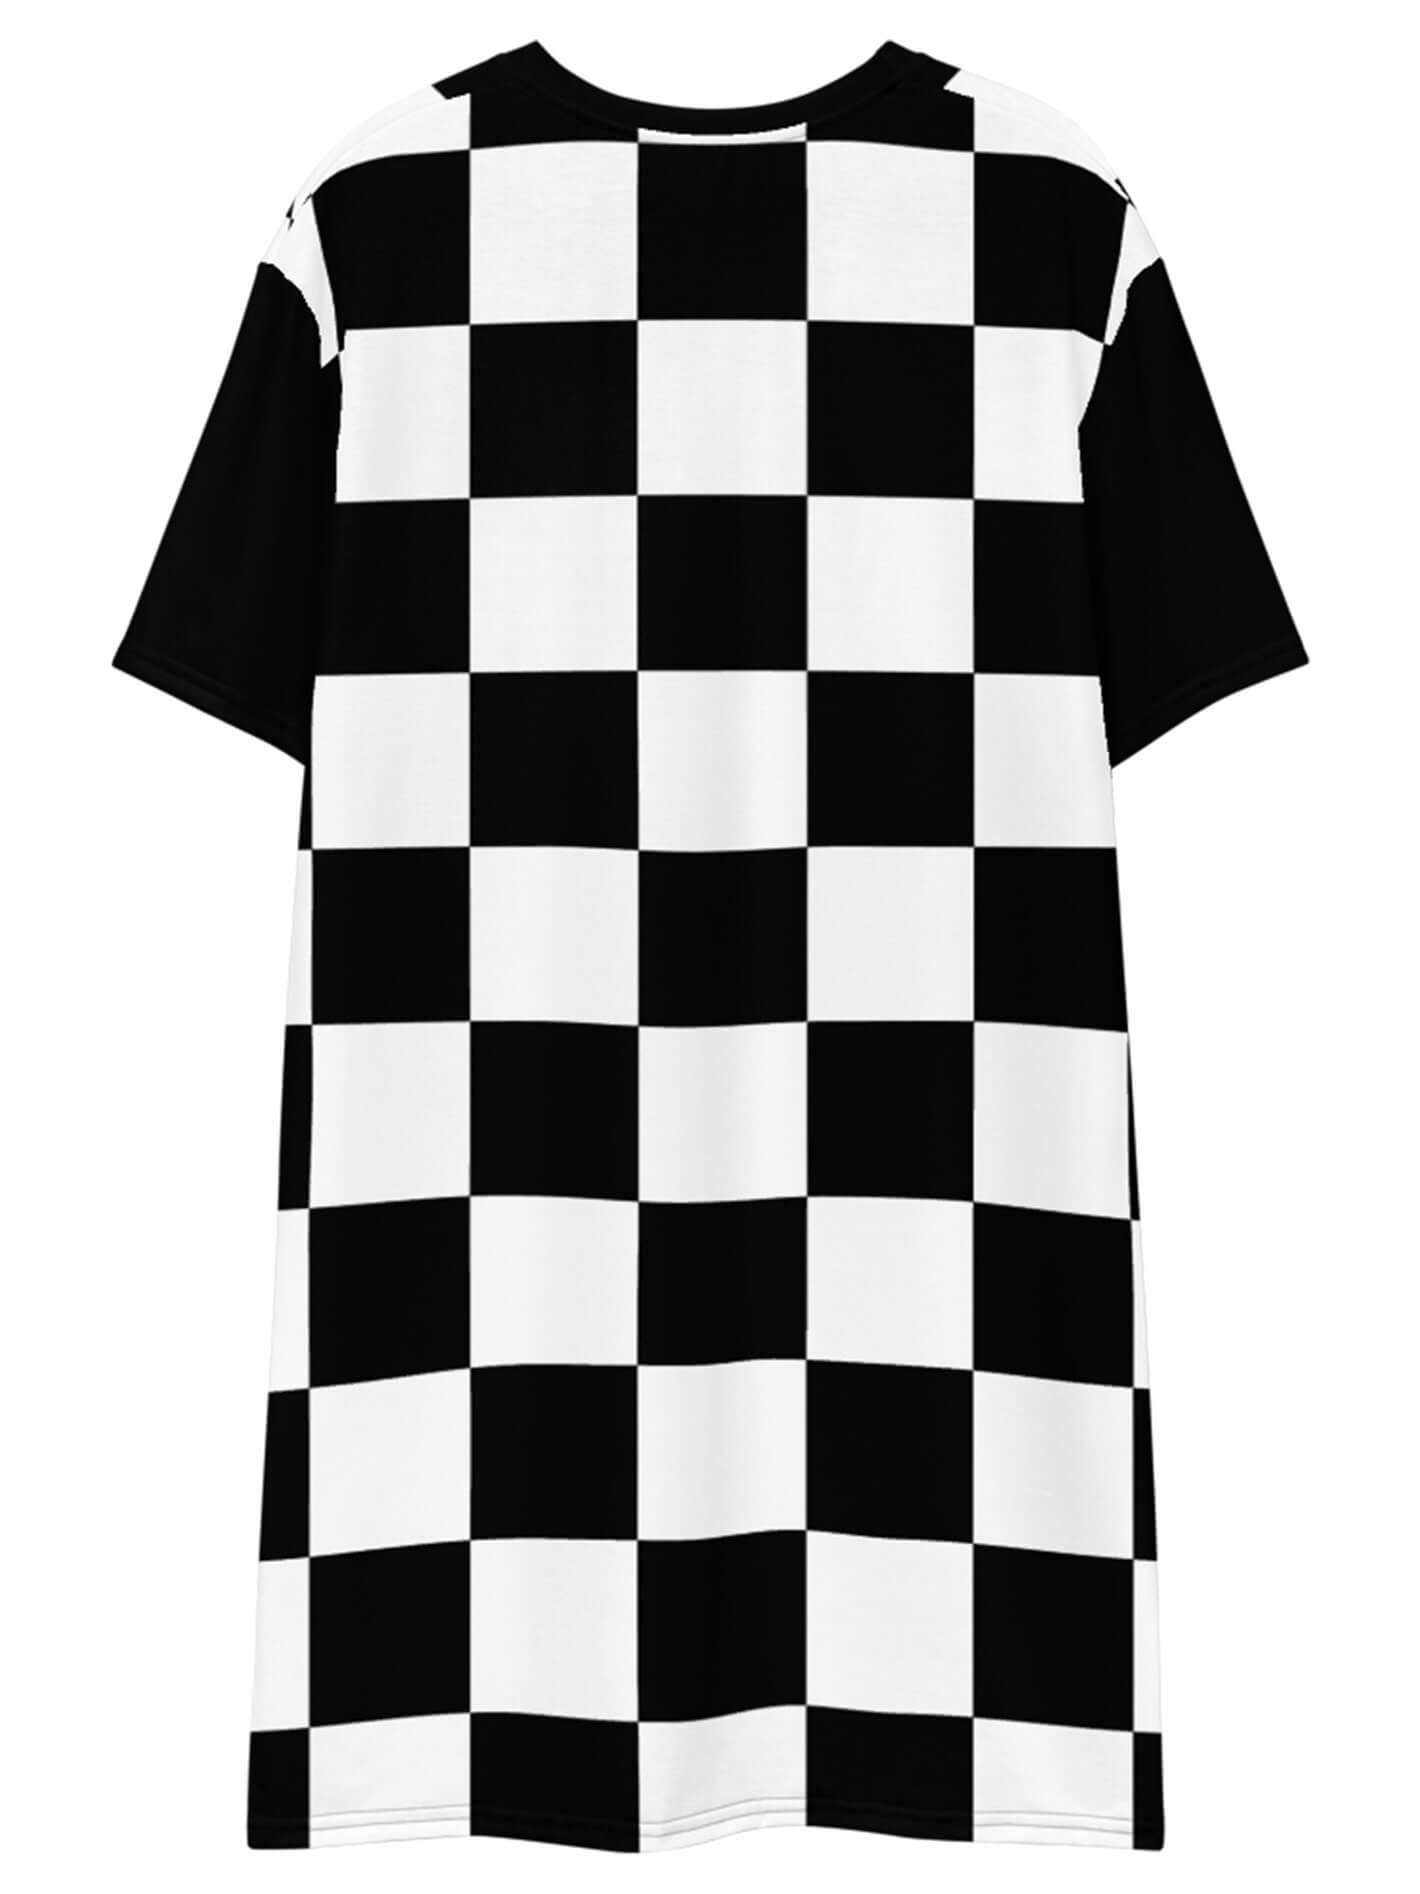 Aesthetic checker t-shirt dress.